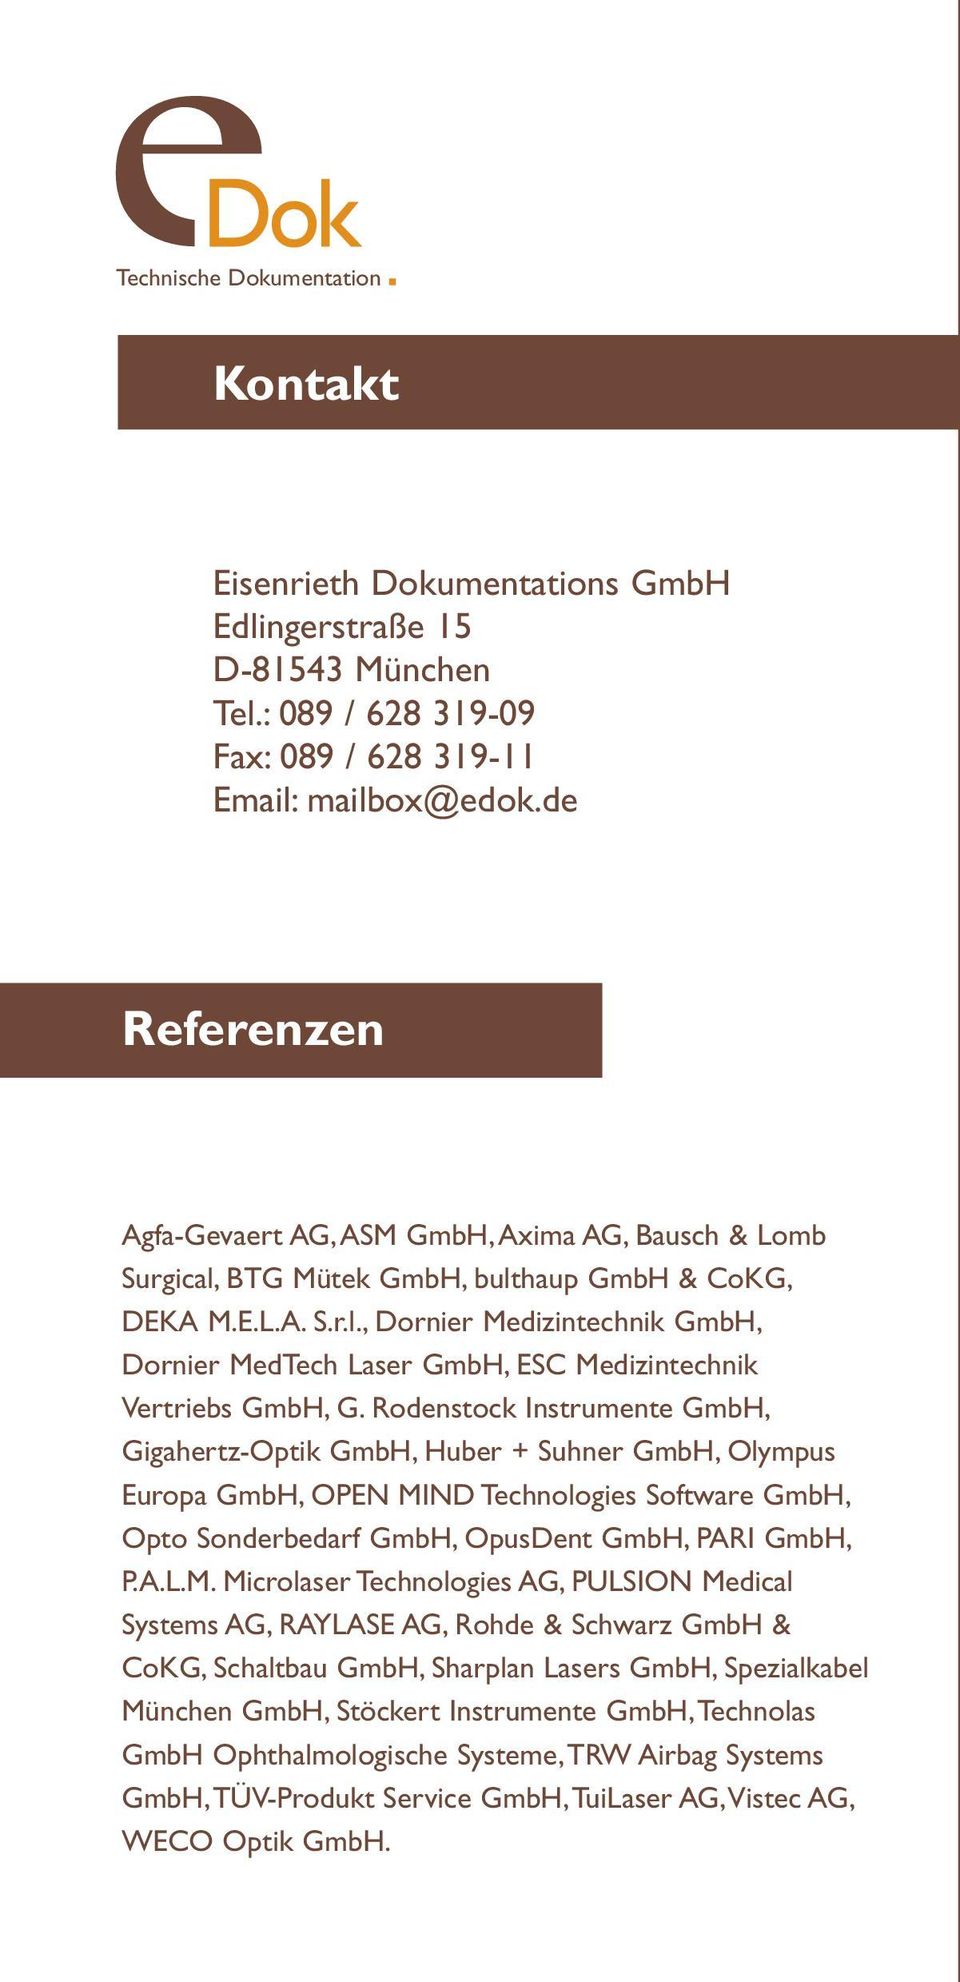 Rodenstock Instrumente GmbH, Gigahertz-Optik GmbH, Huber + Suhner GmbH, Olympus Europa GmbH, OPEN MI